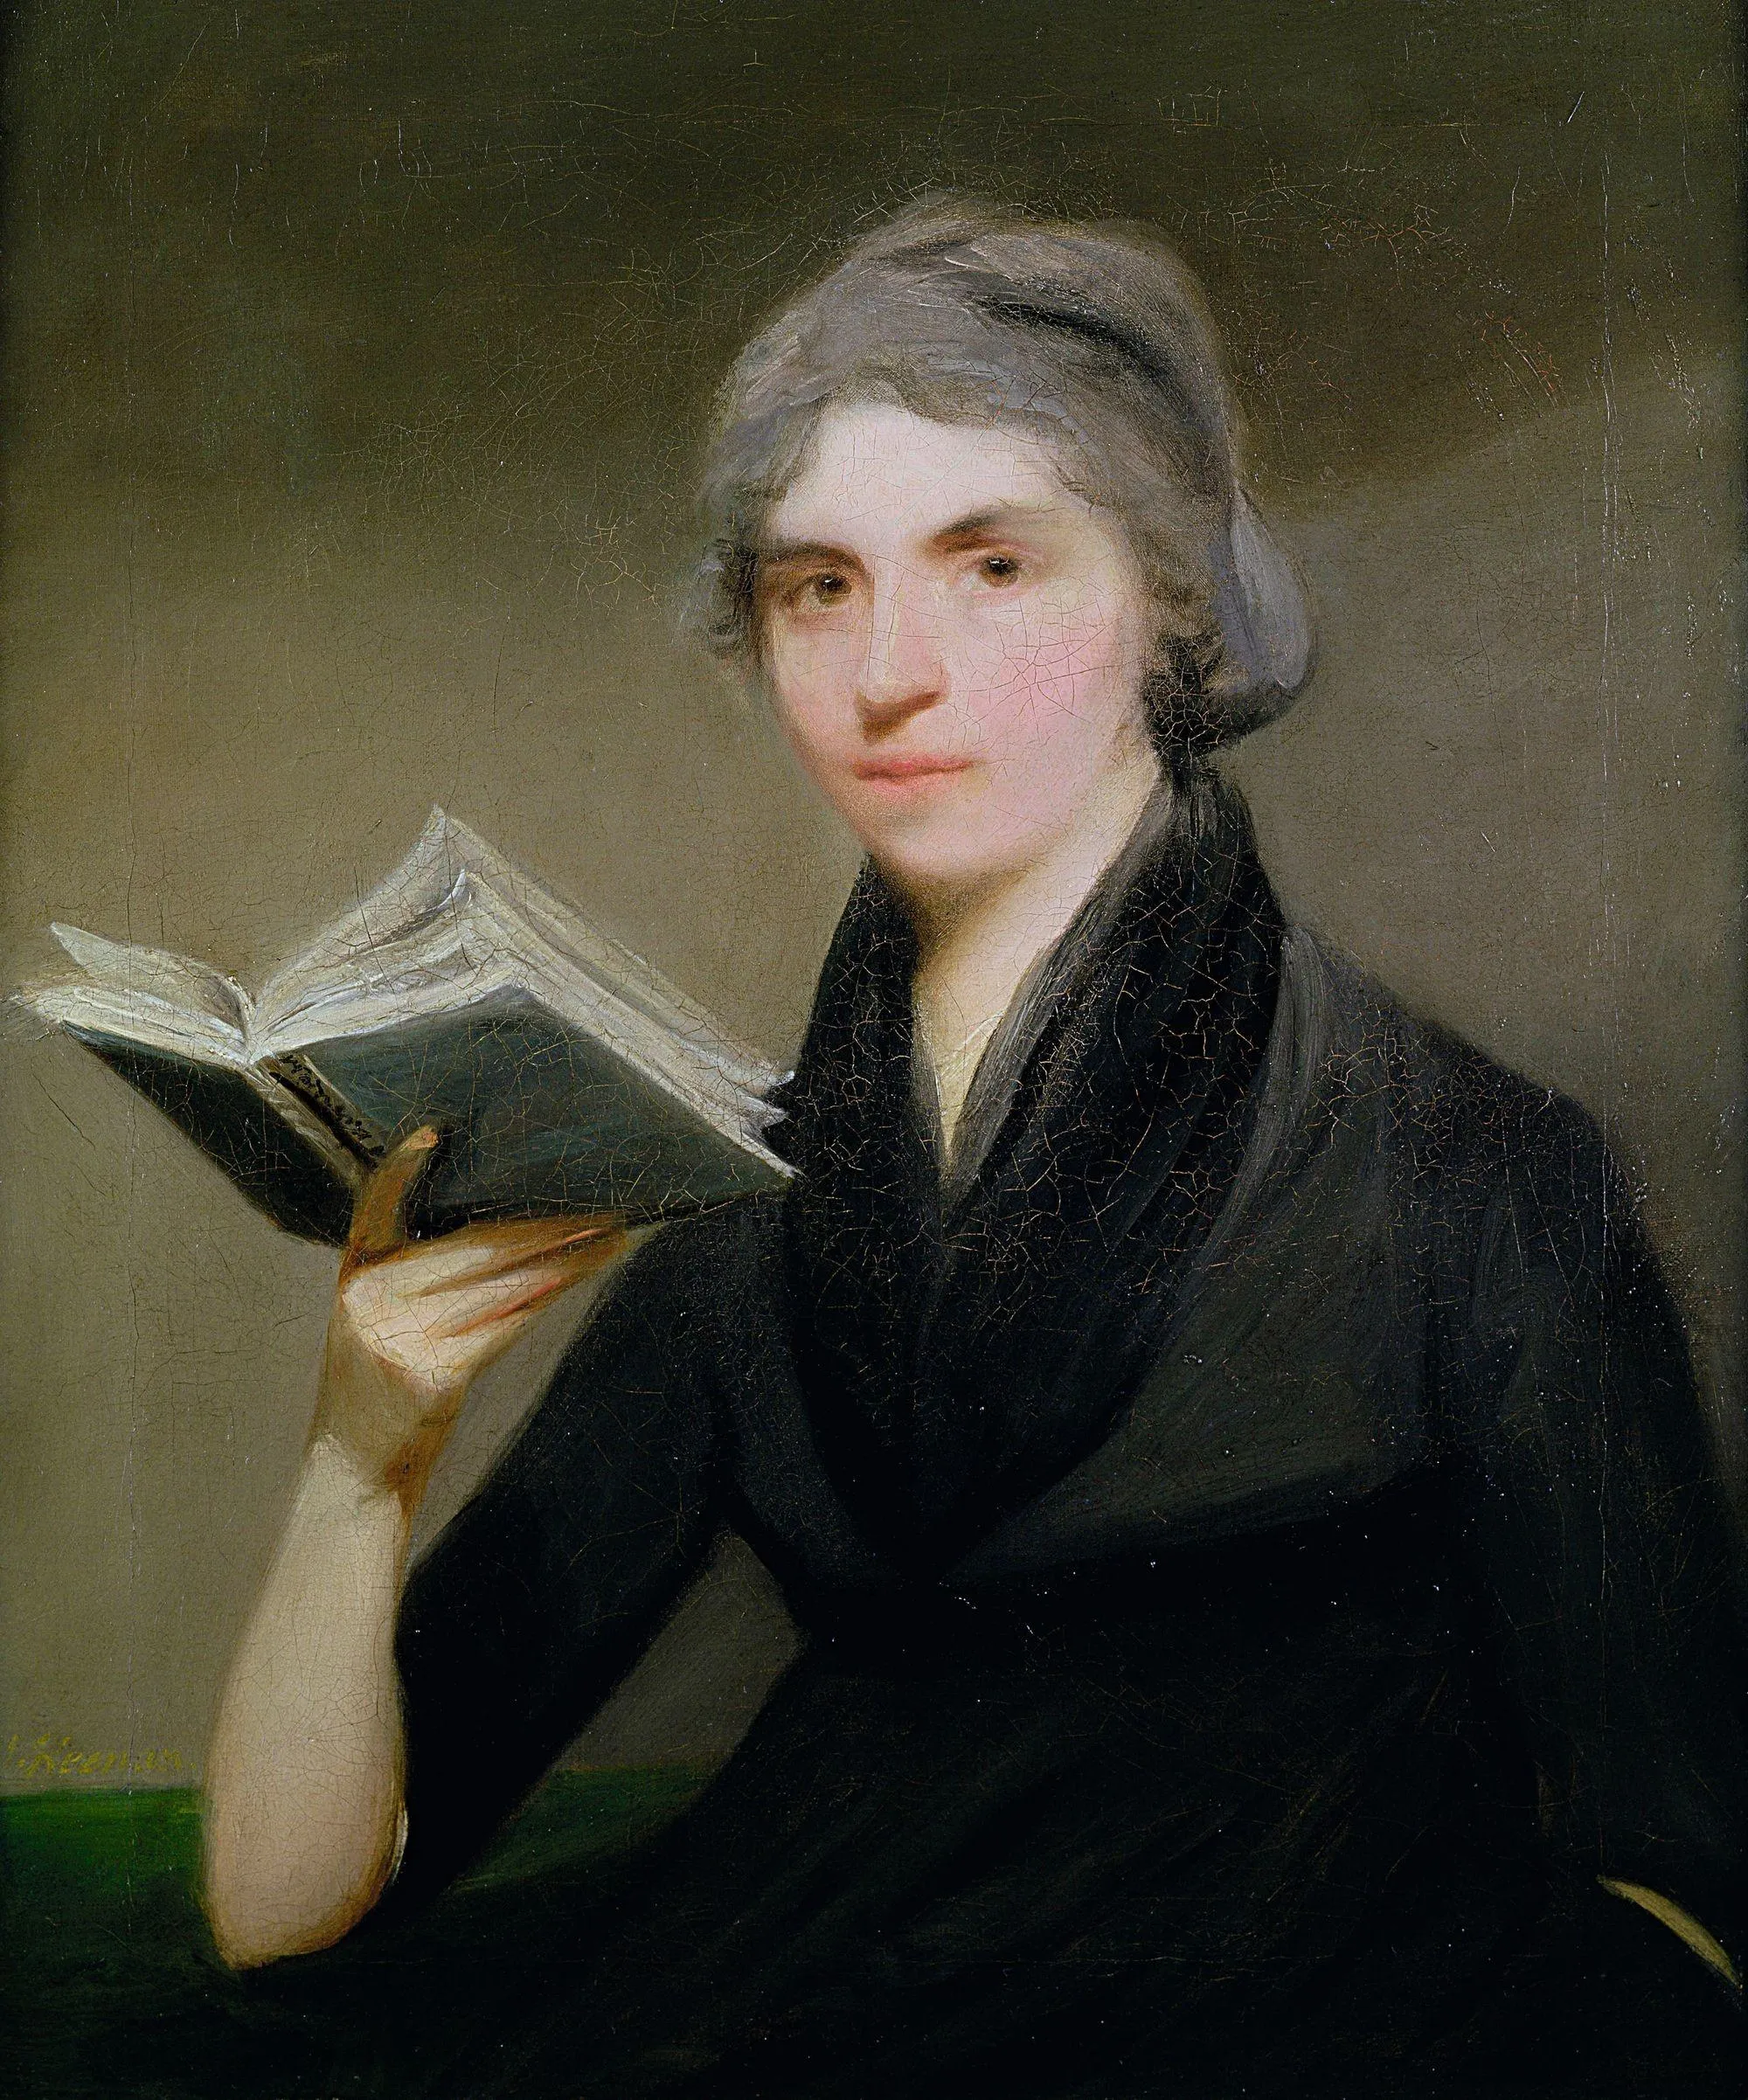 John Keenan, Portrait de Mary Wollstonecraft, 1787, collection privée